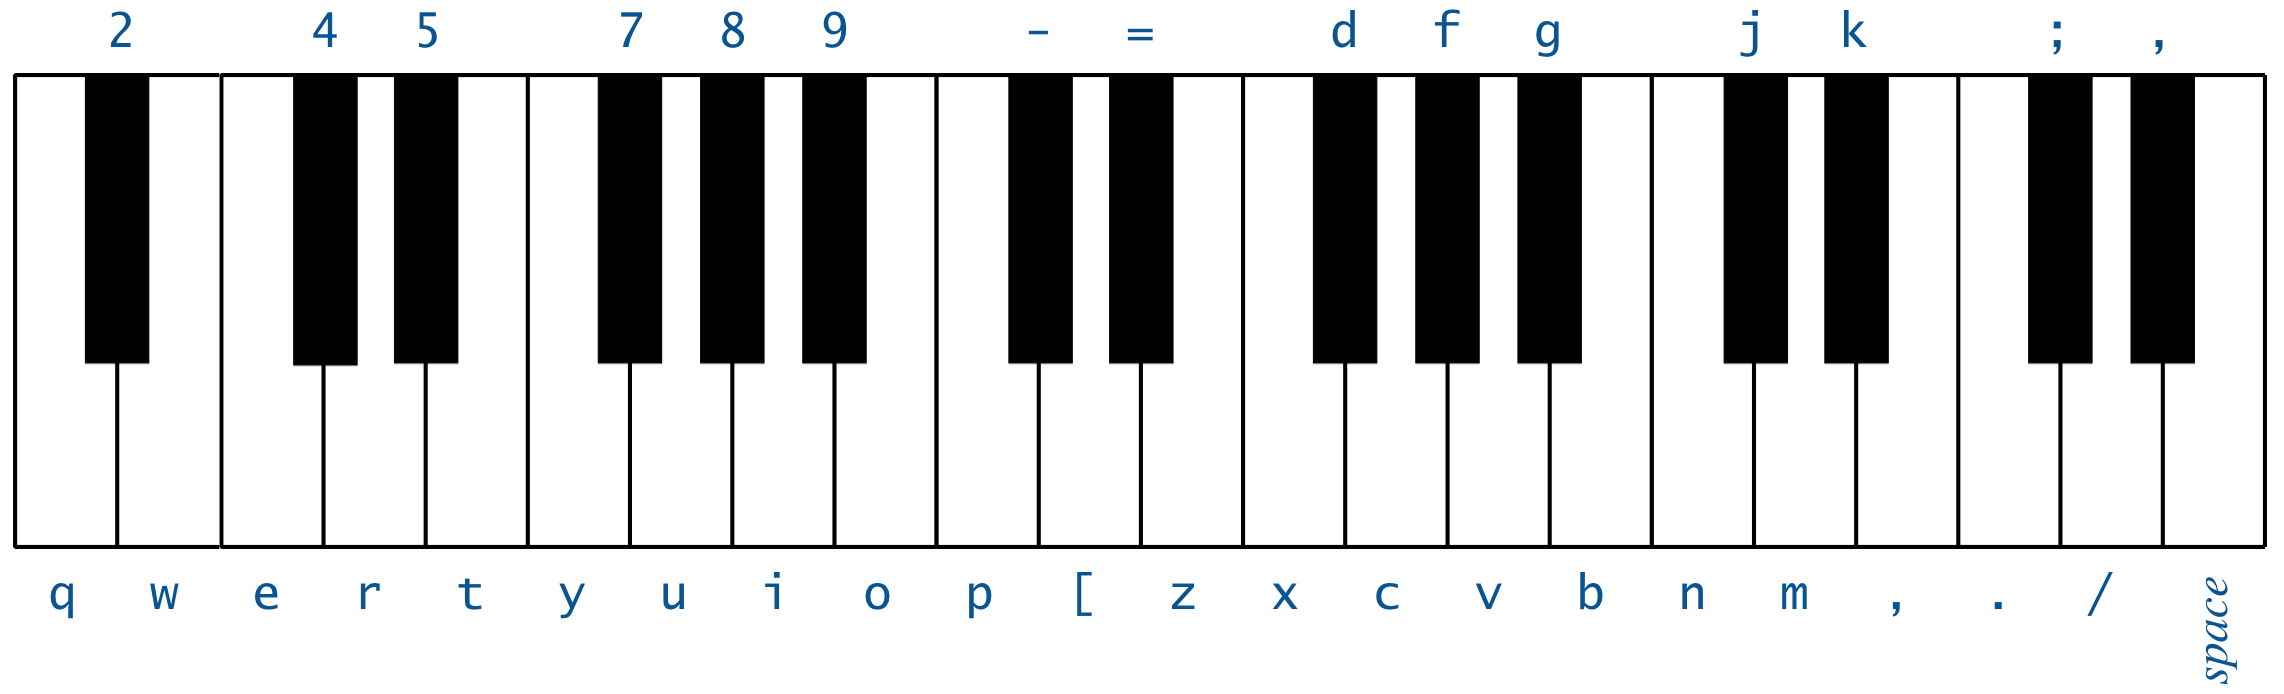 Фото октав. Октава фортепиано 2 октавы. Клавиатура фортепиано 1 и 2 Октава. Клавиатура 2 октавы на а4. Клавиатура фортепиано 2 октавы.